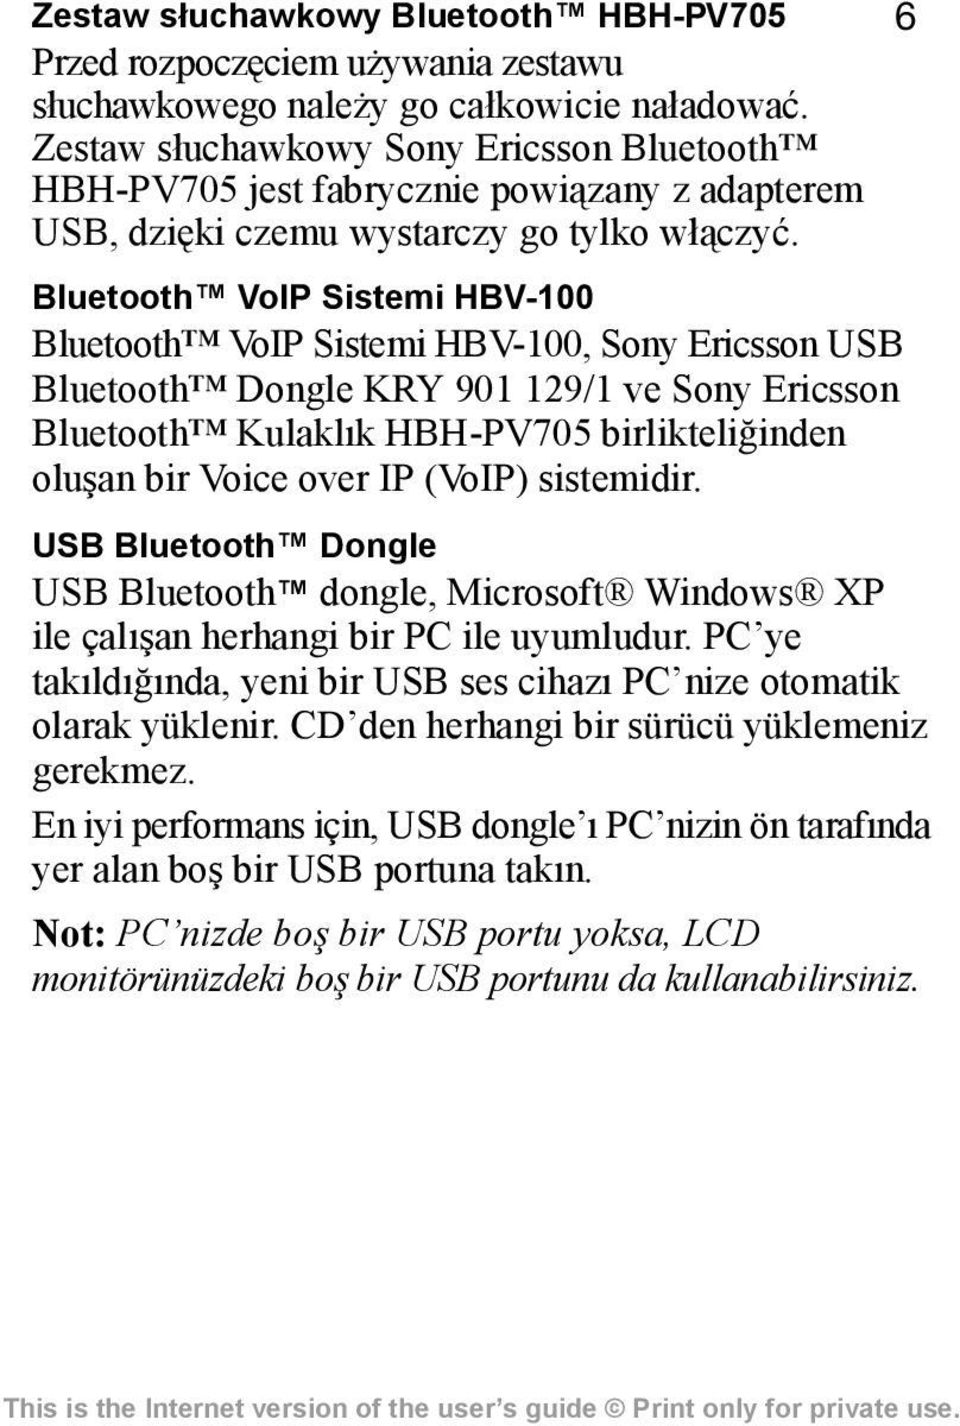 Bluetooth VoIP Sistemi HBV-100 Bluetooth VoIP Sistemi HBV-100, Sony Ericsson USB Bluetooth Dongle KRY 901 129/1 ve Sony Ericsson Bluetooth Kulaklõk HBH-PV705 birlikteliğinden oluşan bir Voice over IP